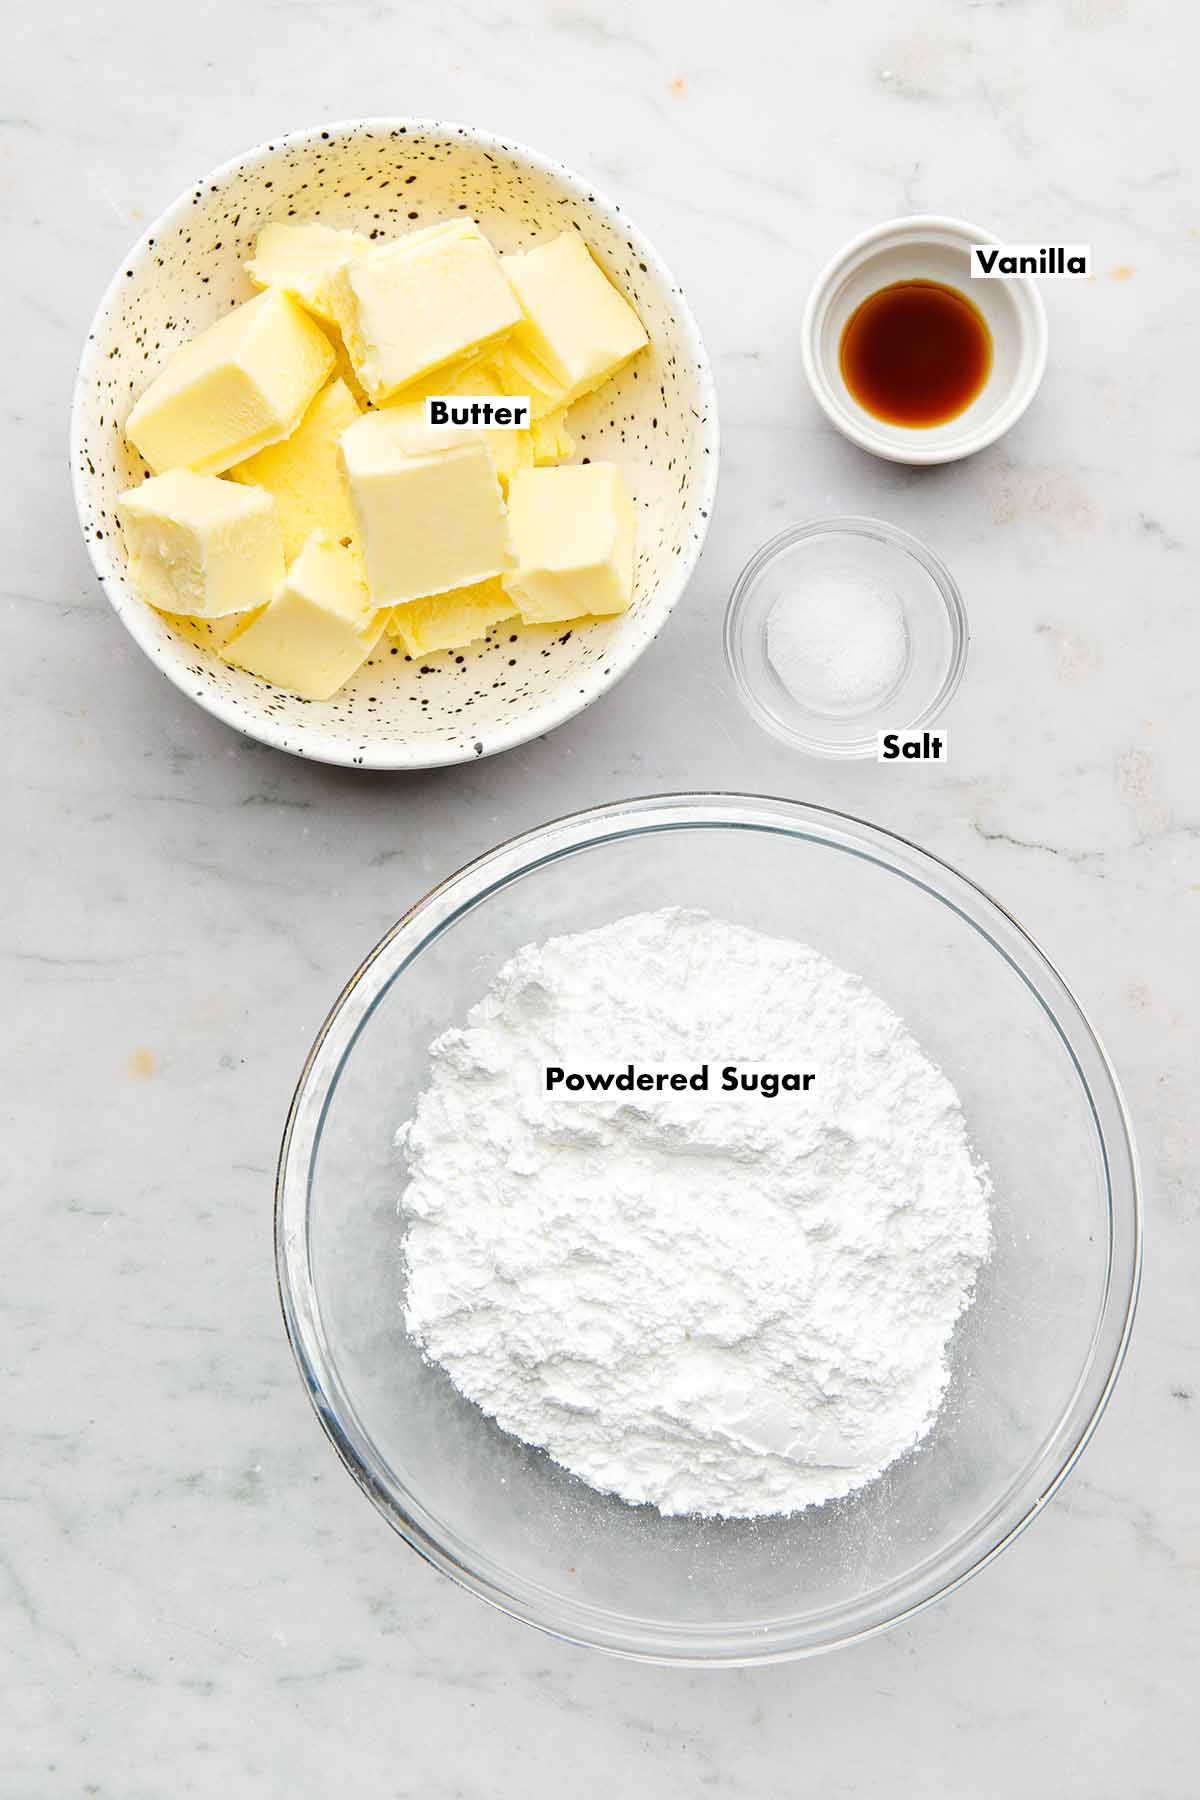 Ingredients to make Nanny Burke's buttercream.